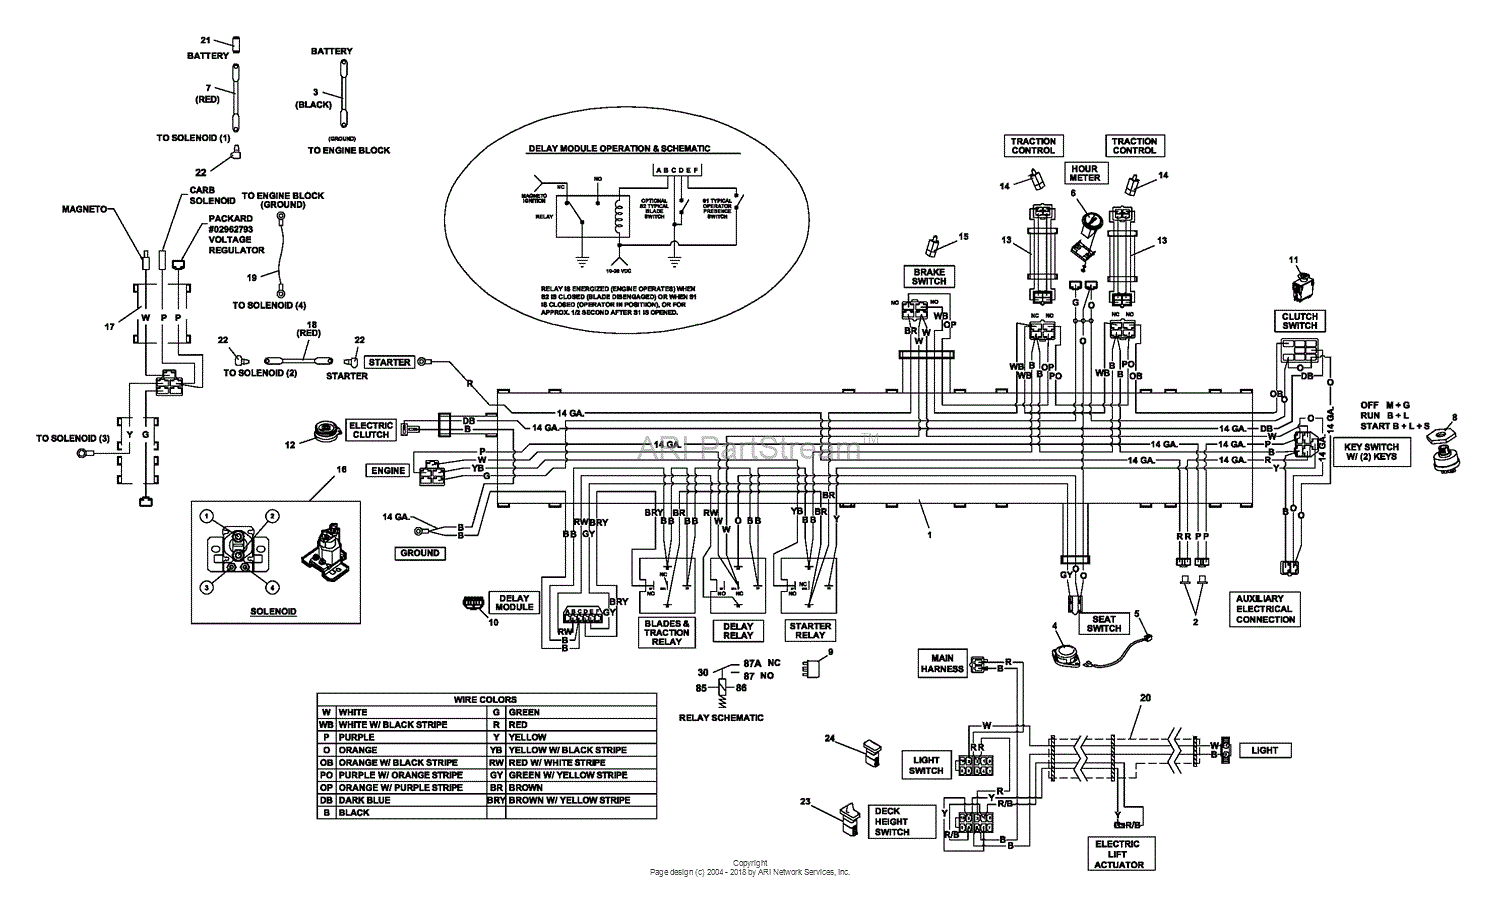 Diagram Honda Main Relay Wiring Diagram Full Version Hd Quality Wiring Diagram Voltagemachines Lorraine Taxi Fr